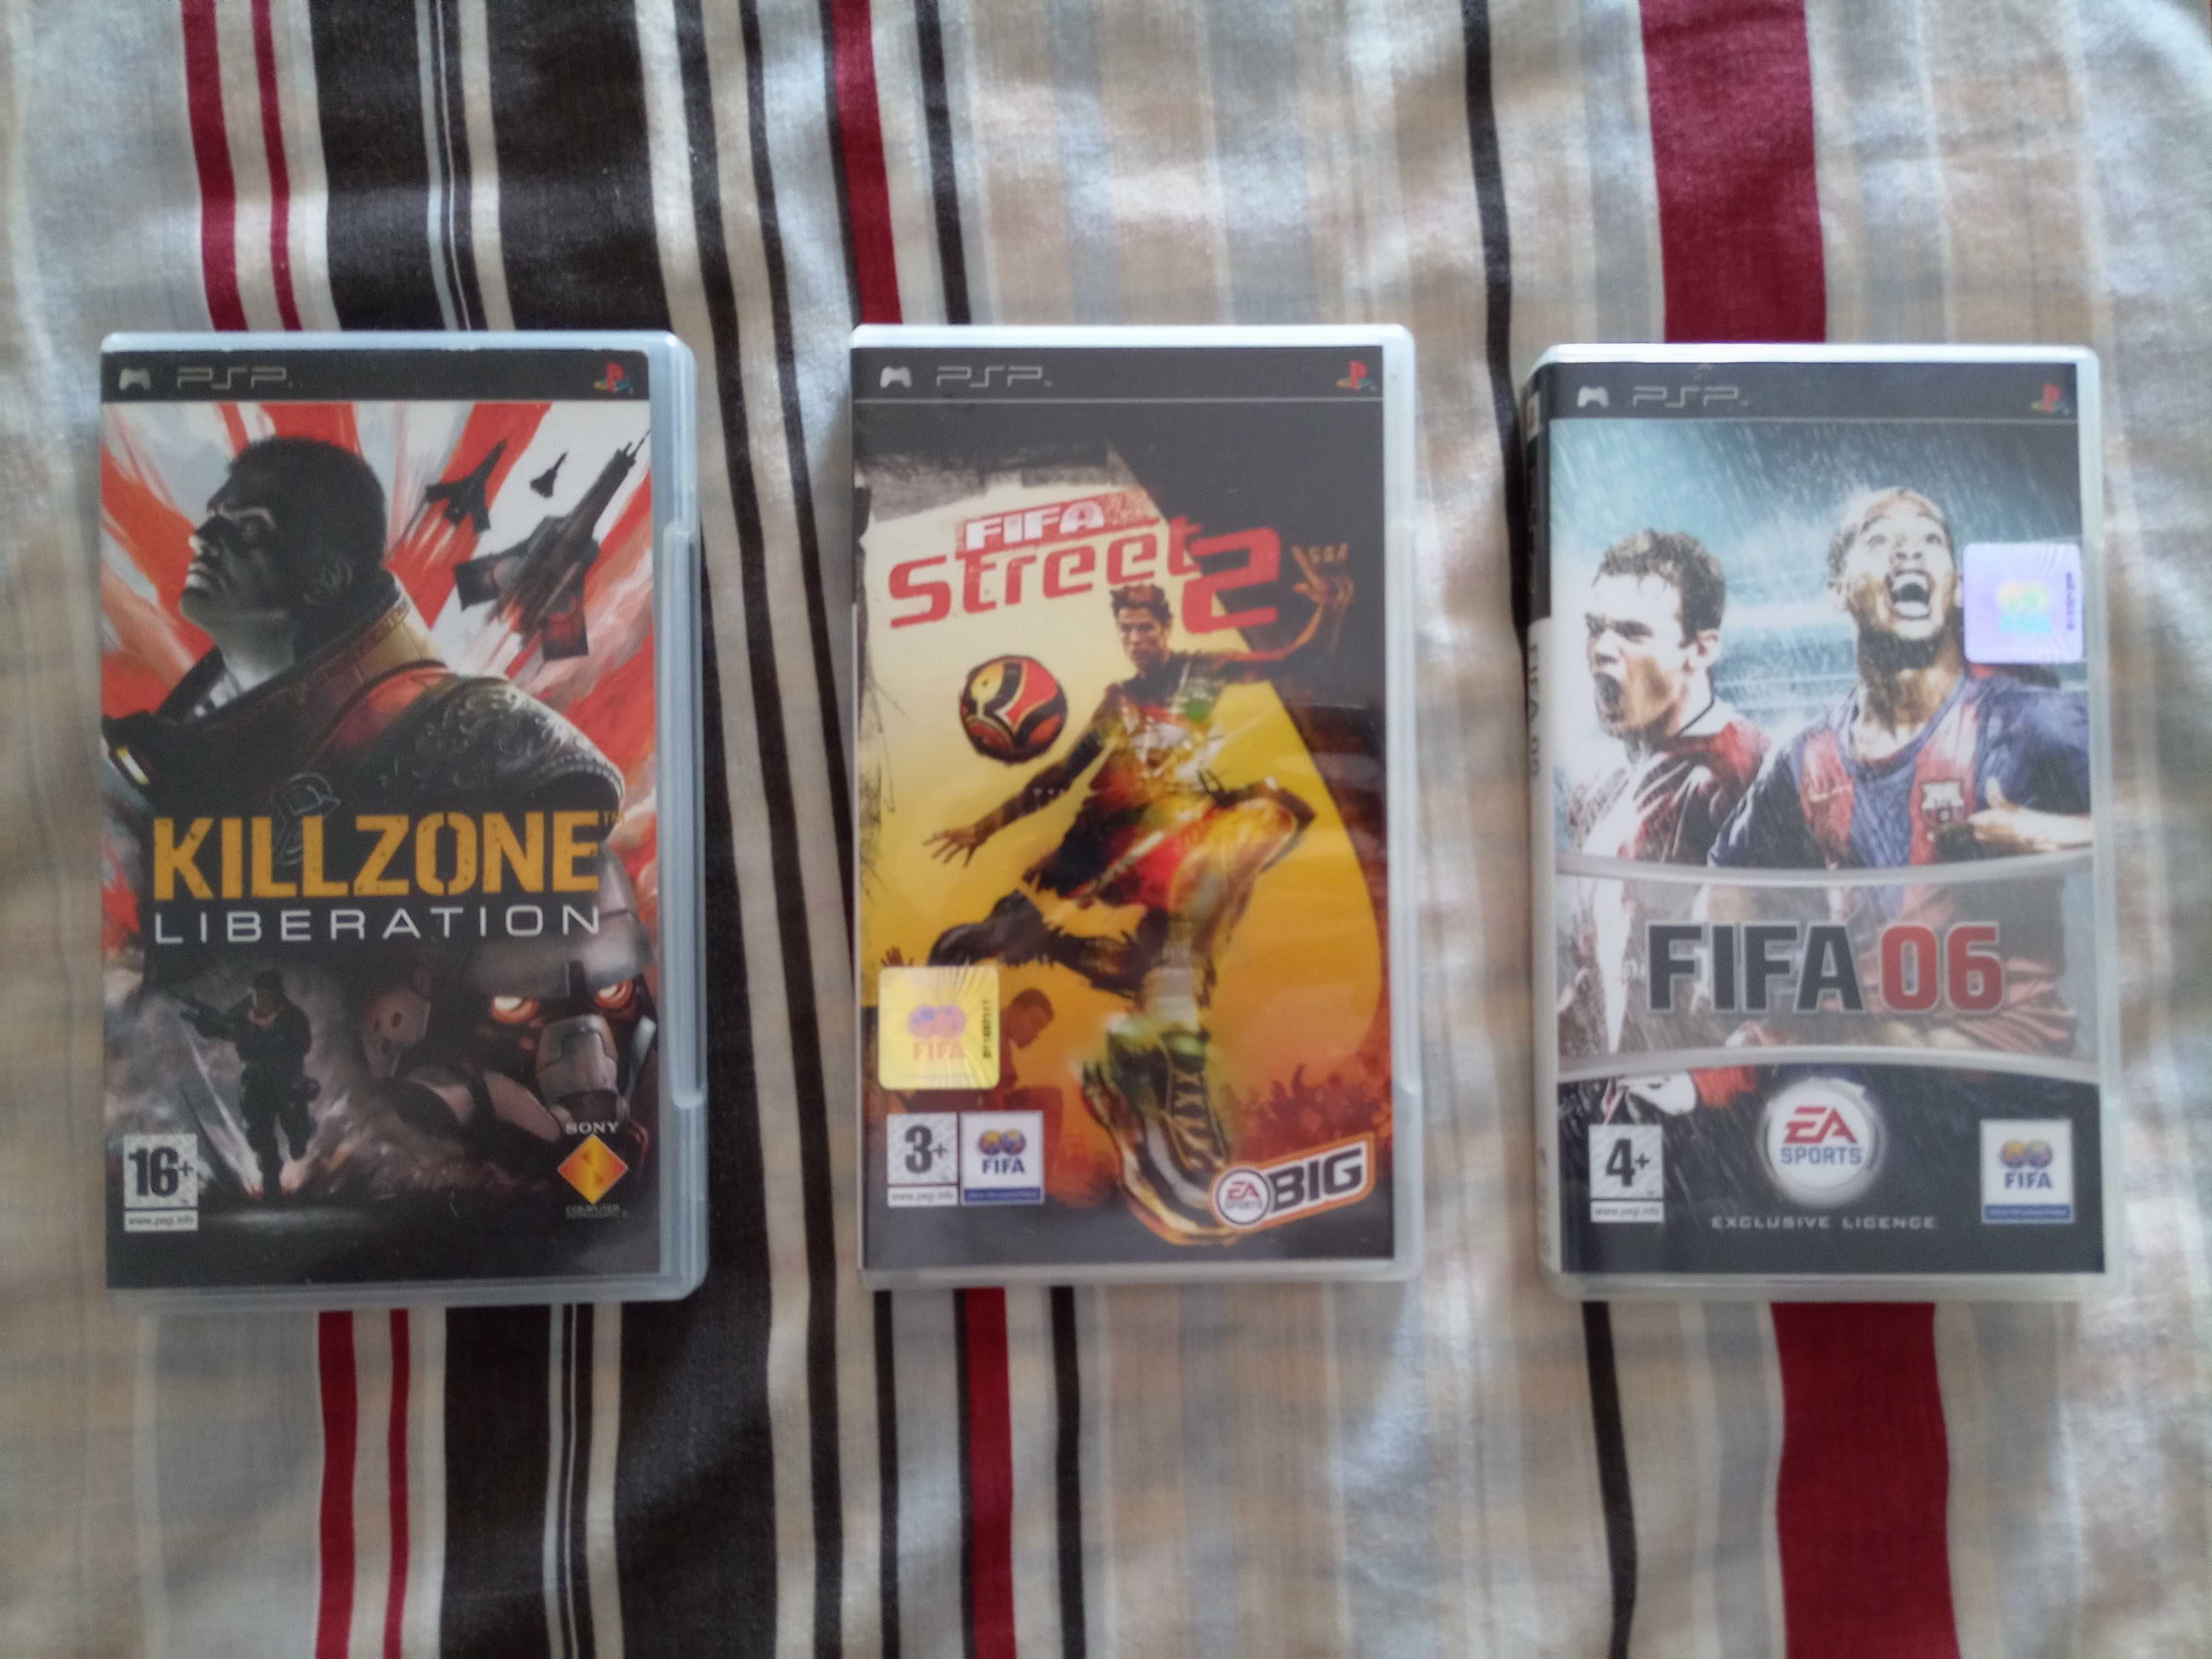 Jogos PSP futebol FIFA Street 2 e FIFA 06